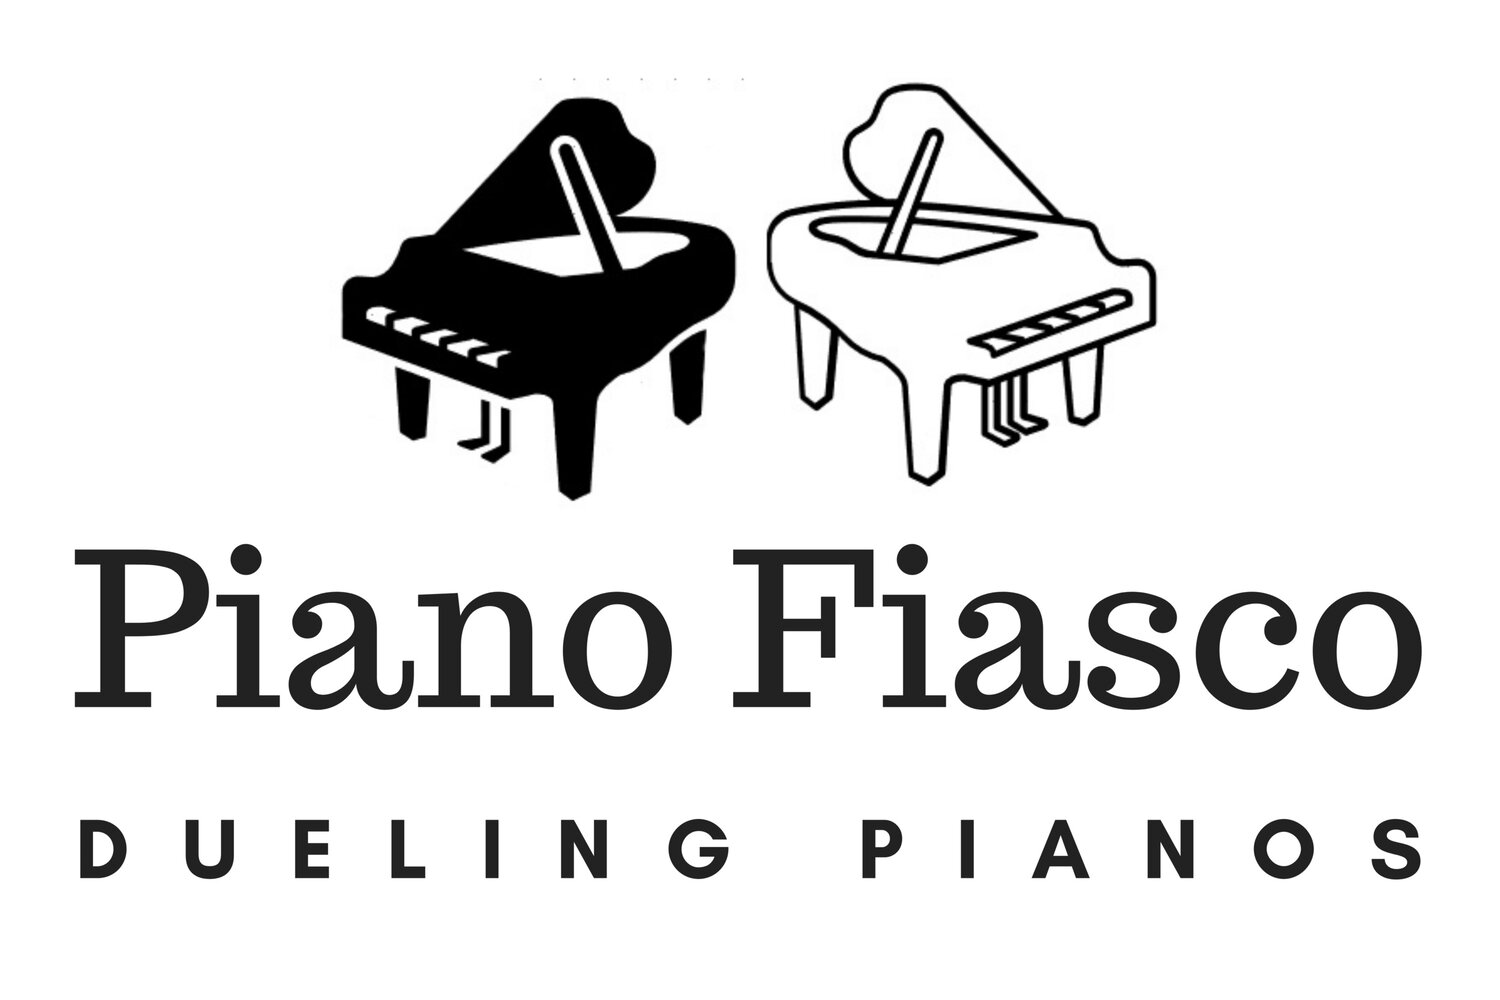 Piano Fiasco